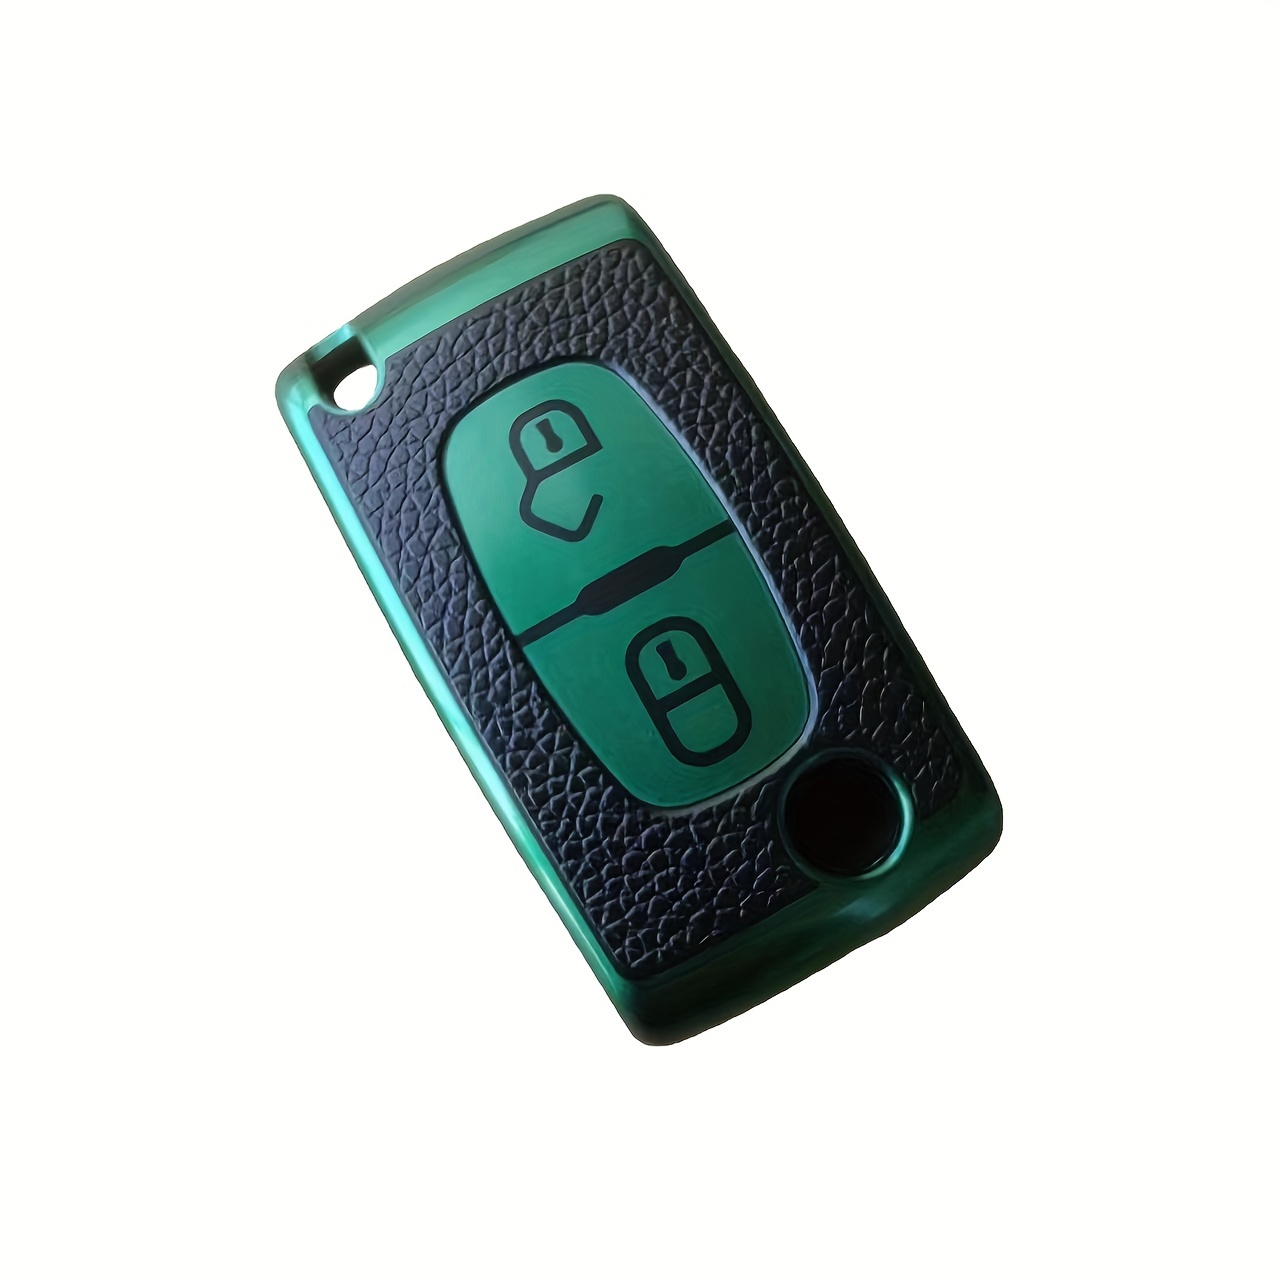 Tpu Leather 2/3 Buttons Car Remote Key Case Cover Citroen C2